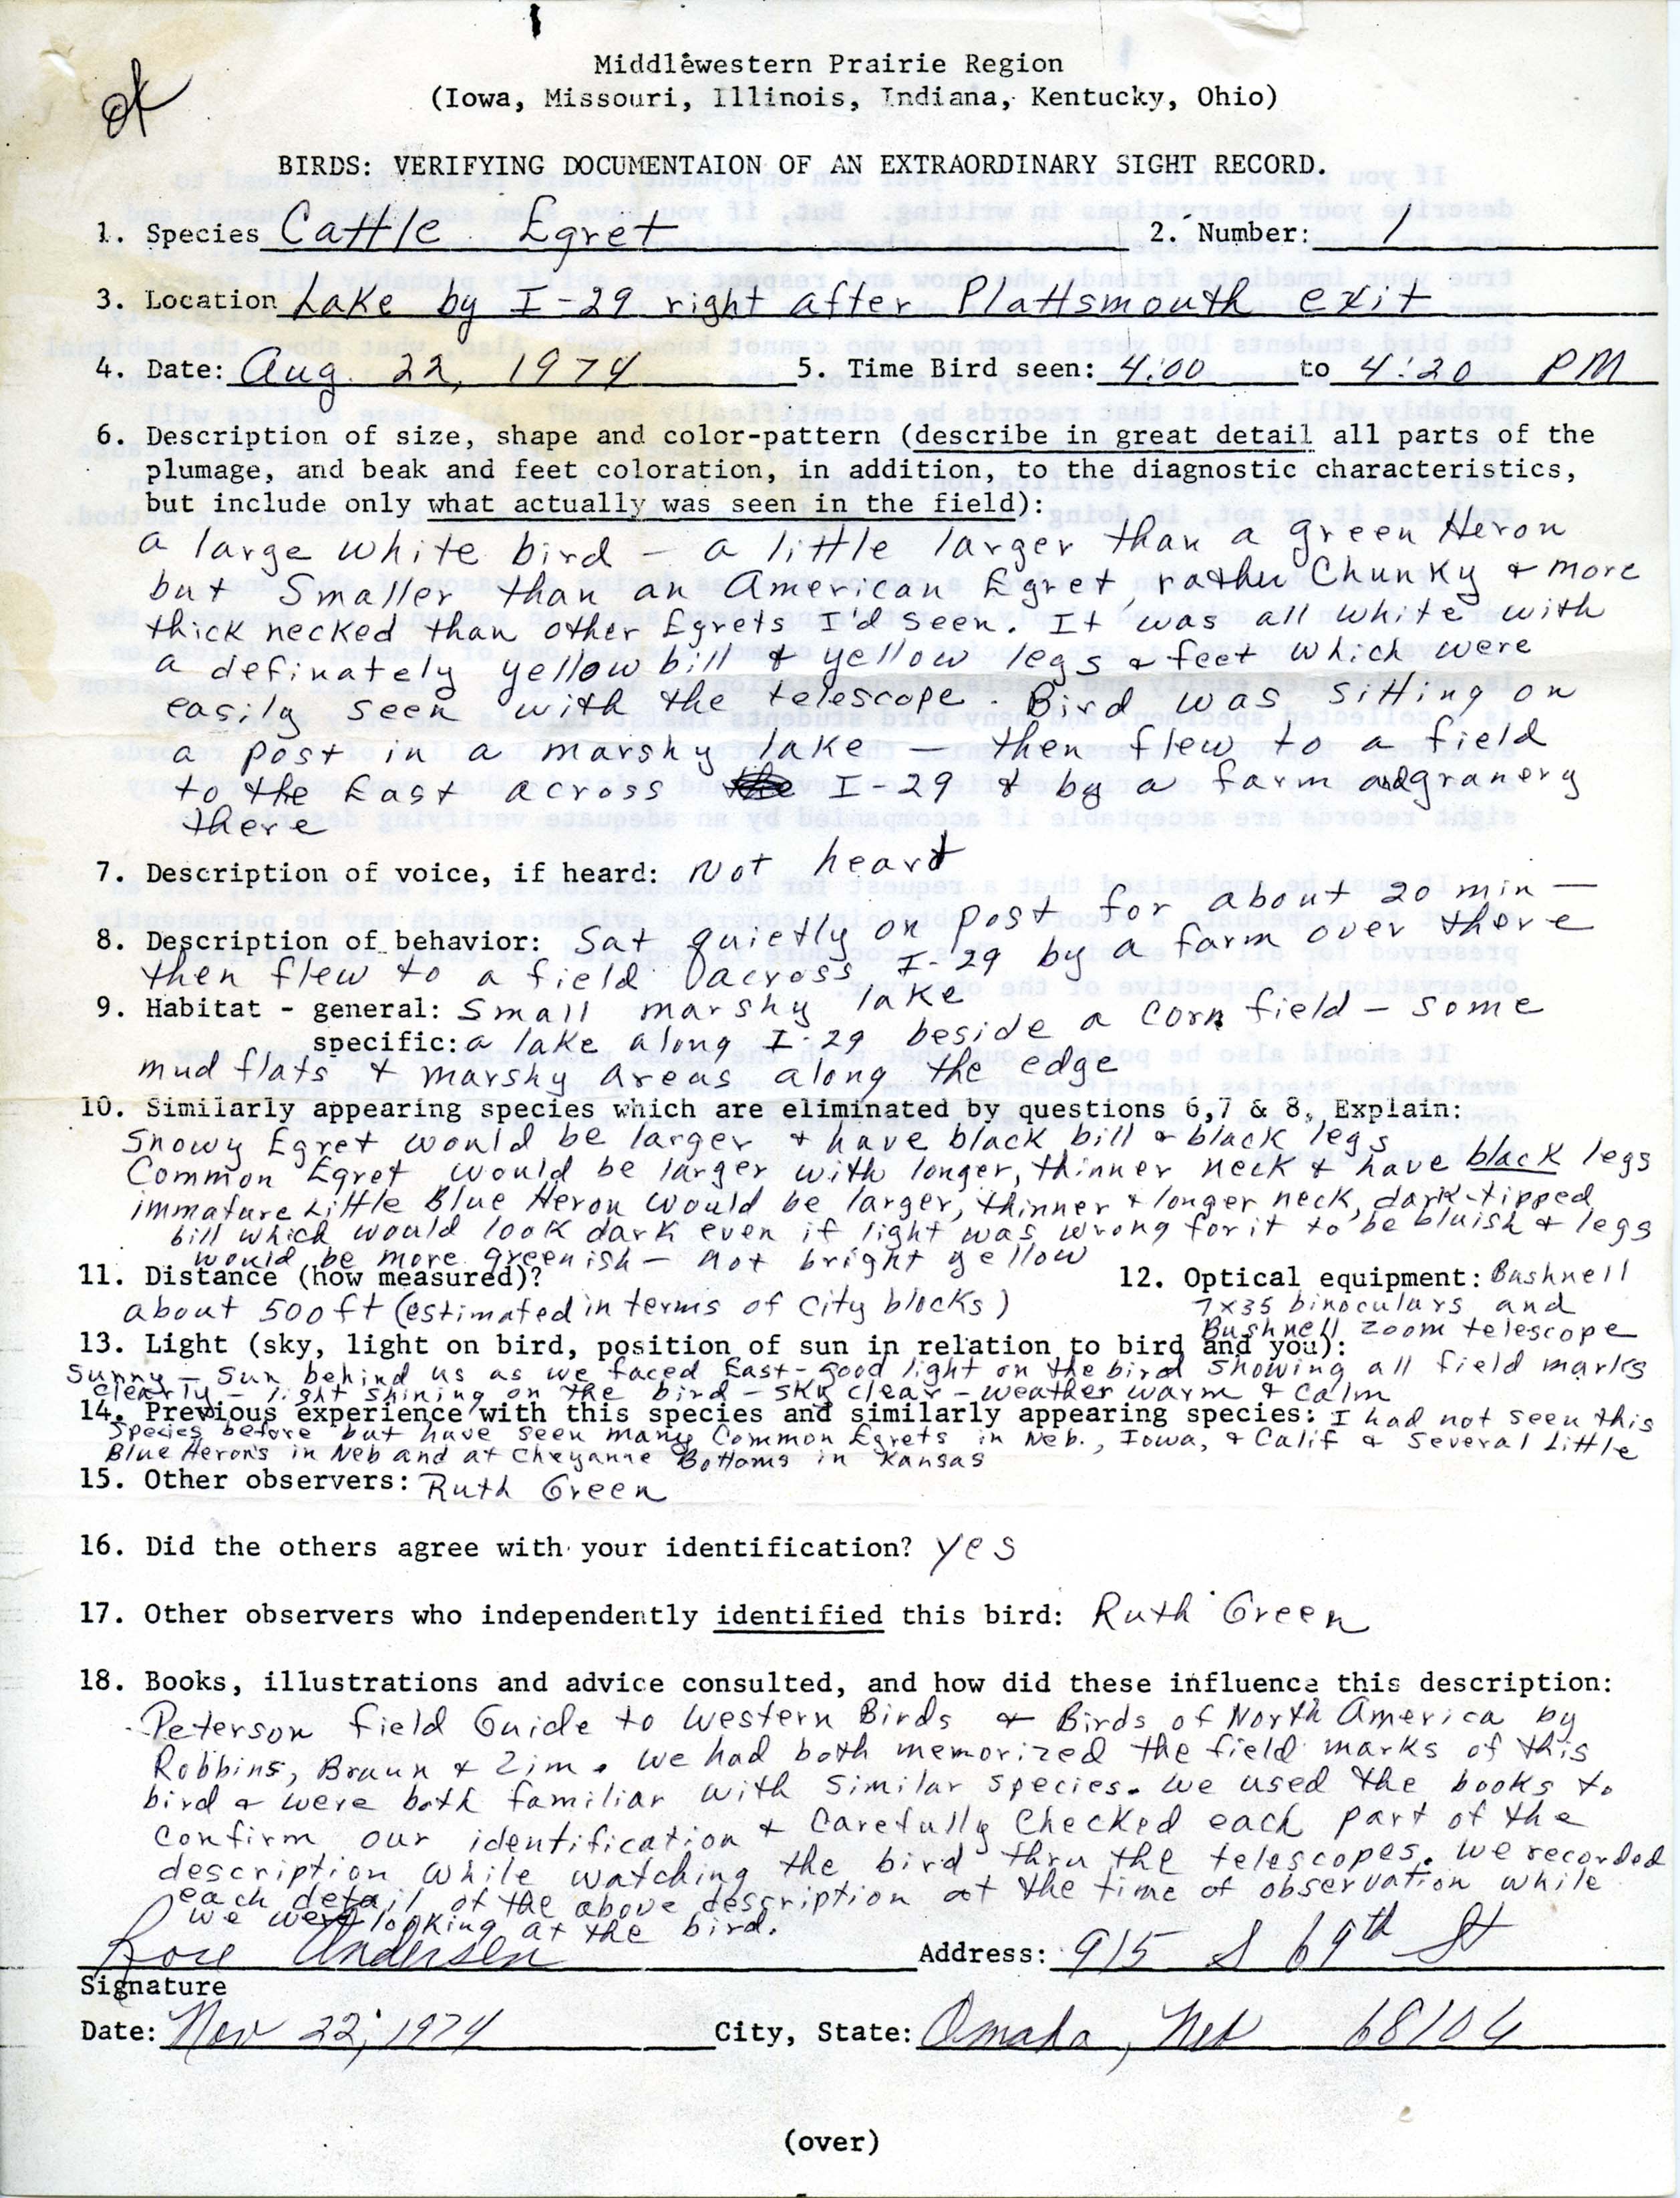 Rare bird documentation form for Cattle Egret near Interchange 35 of I-29, 1974